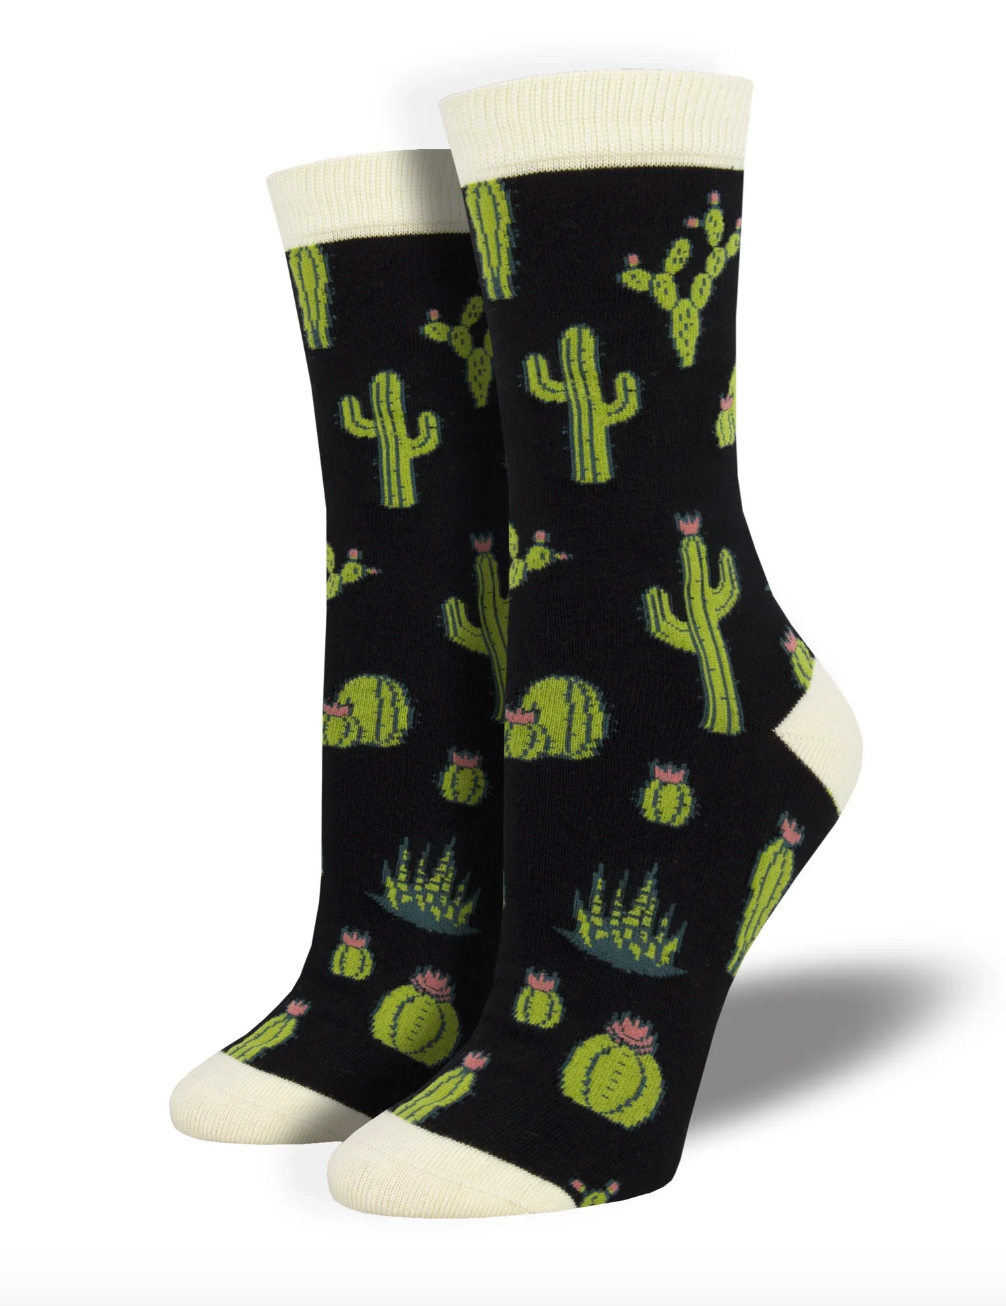 King Cactus Women's Crew Socks